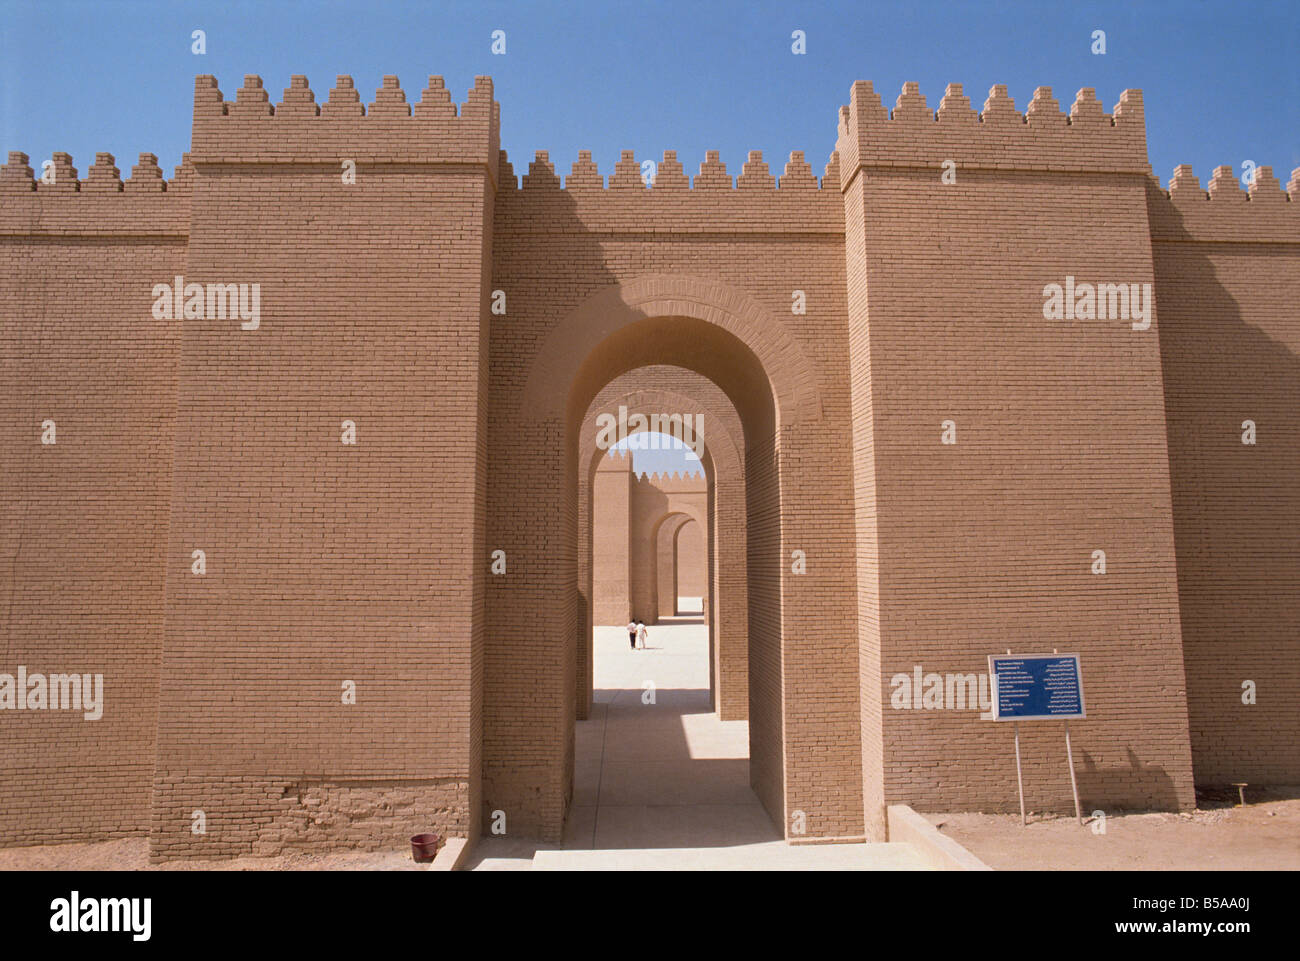 Nabuchodonosor s Palace Babylon Iraq Middle East G Thouvenin Stock Photo